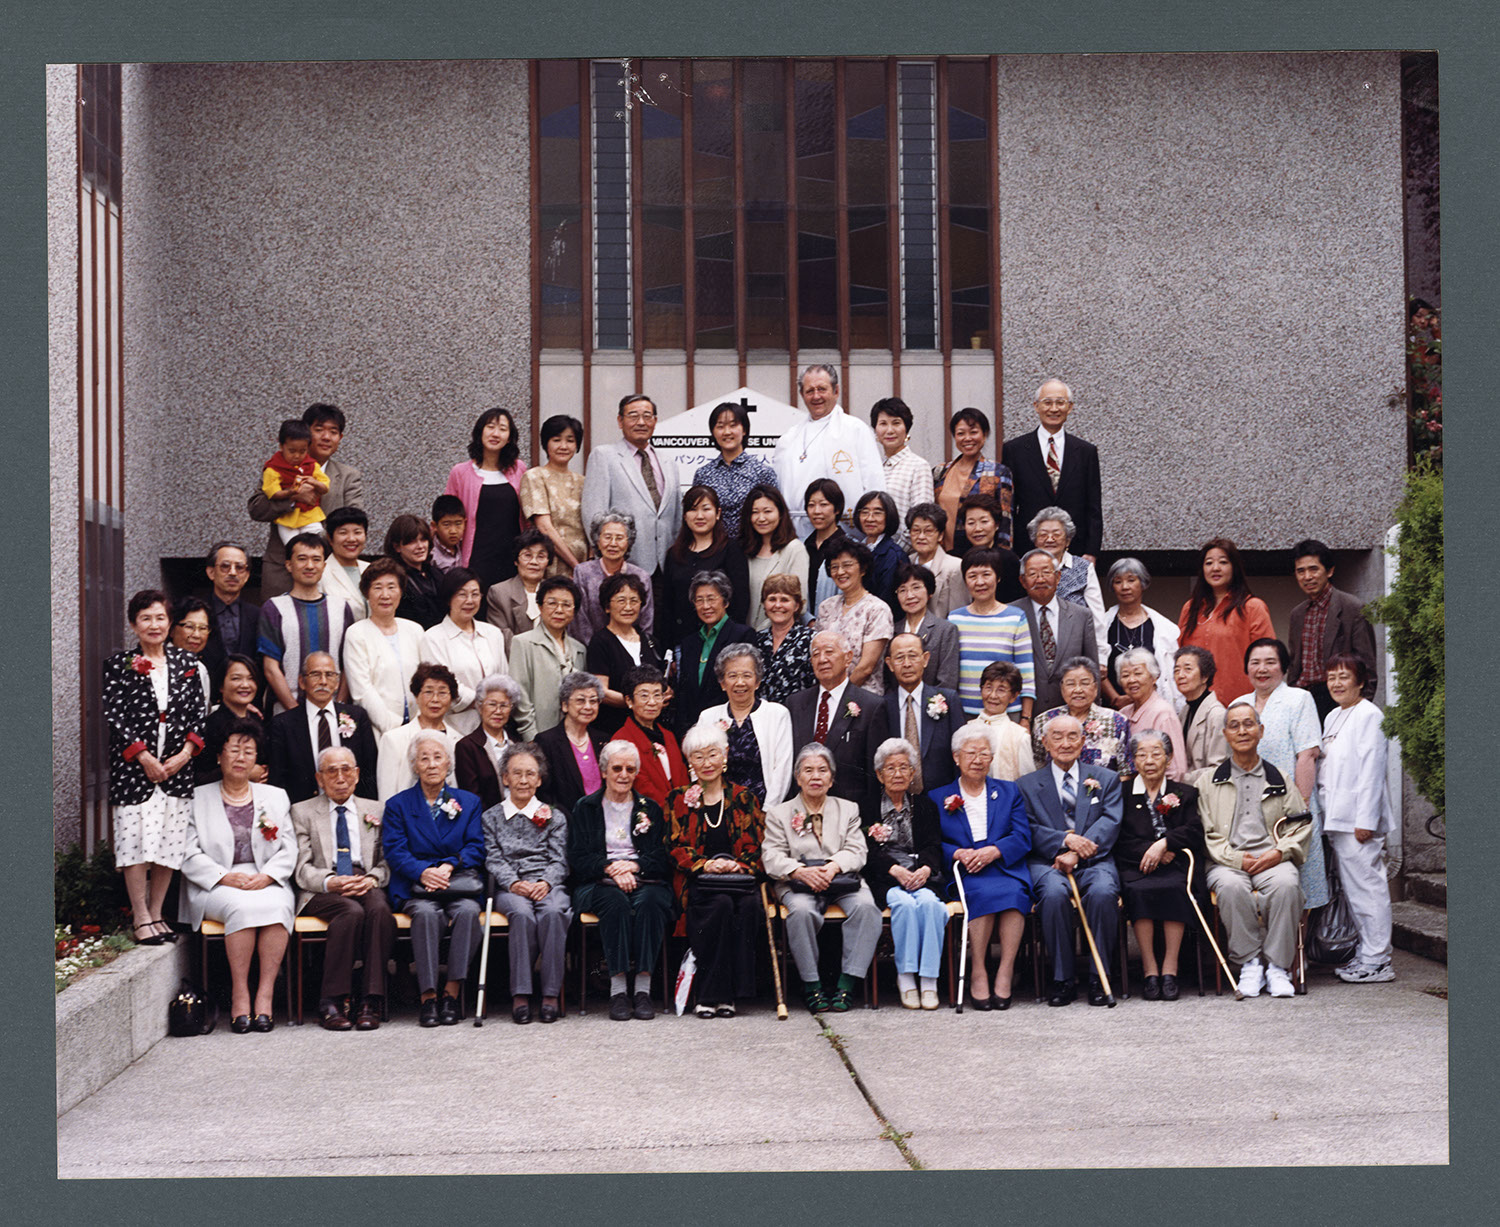 Group portrait of congregation, seniors' day